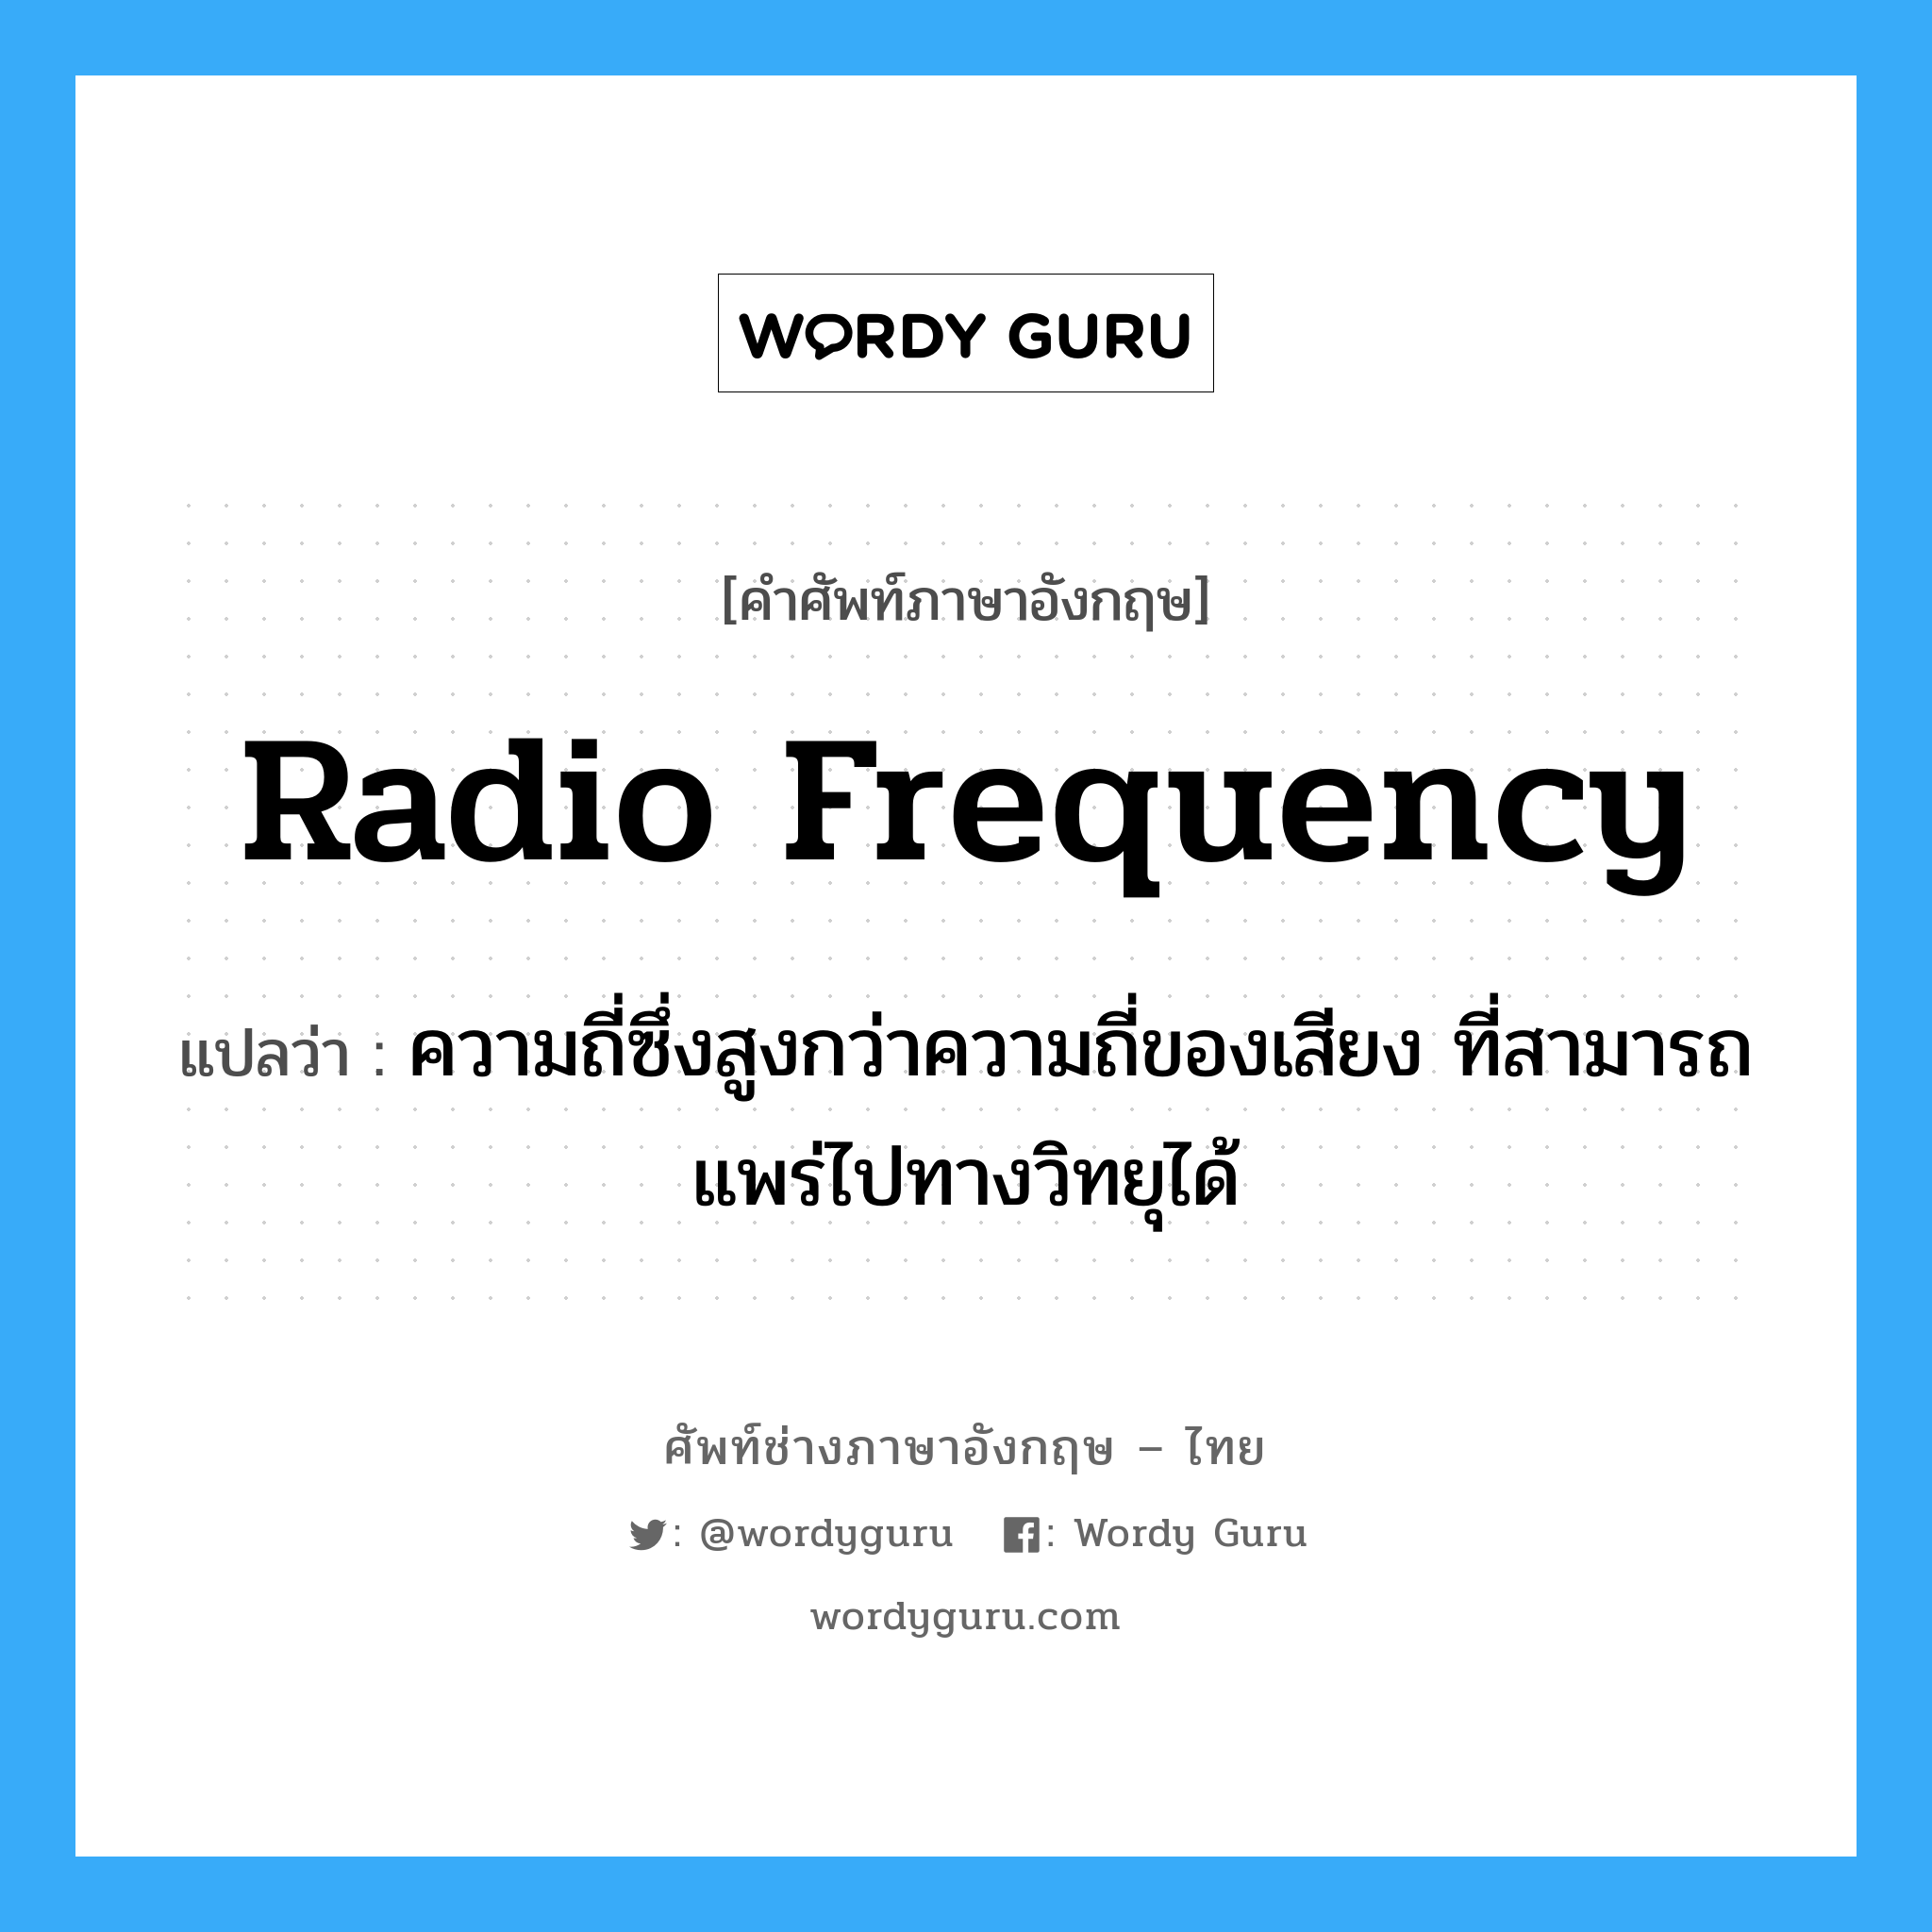 radio-frequency แปลว่า?, คำศัพท์ช่างภาษาอังกฤษ - ไทย radio frequency คำศัพท์ภาษาอังกฤษ radio frequency แปลว่า ความถี่ซึ่งสูงกว่าความถี่ของเสียง ที่สามารถแพร่ไปทางวิทยุได้